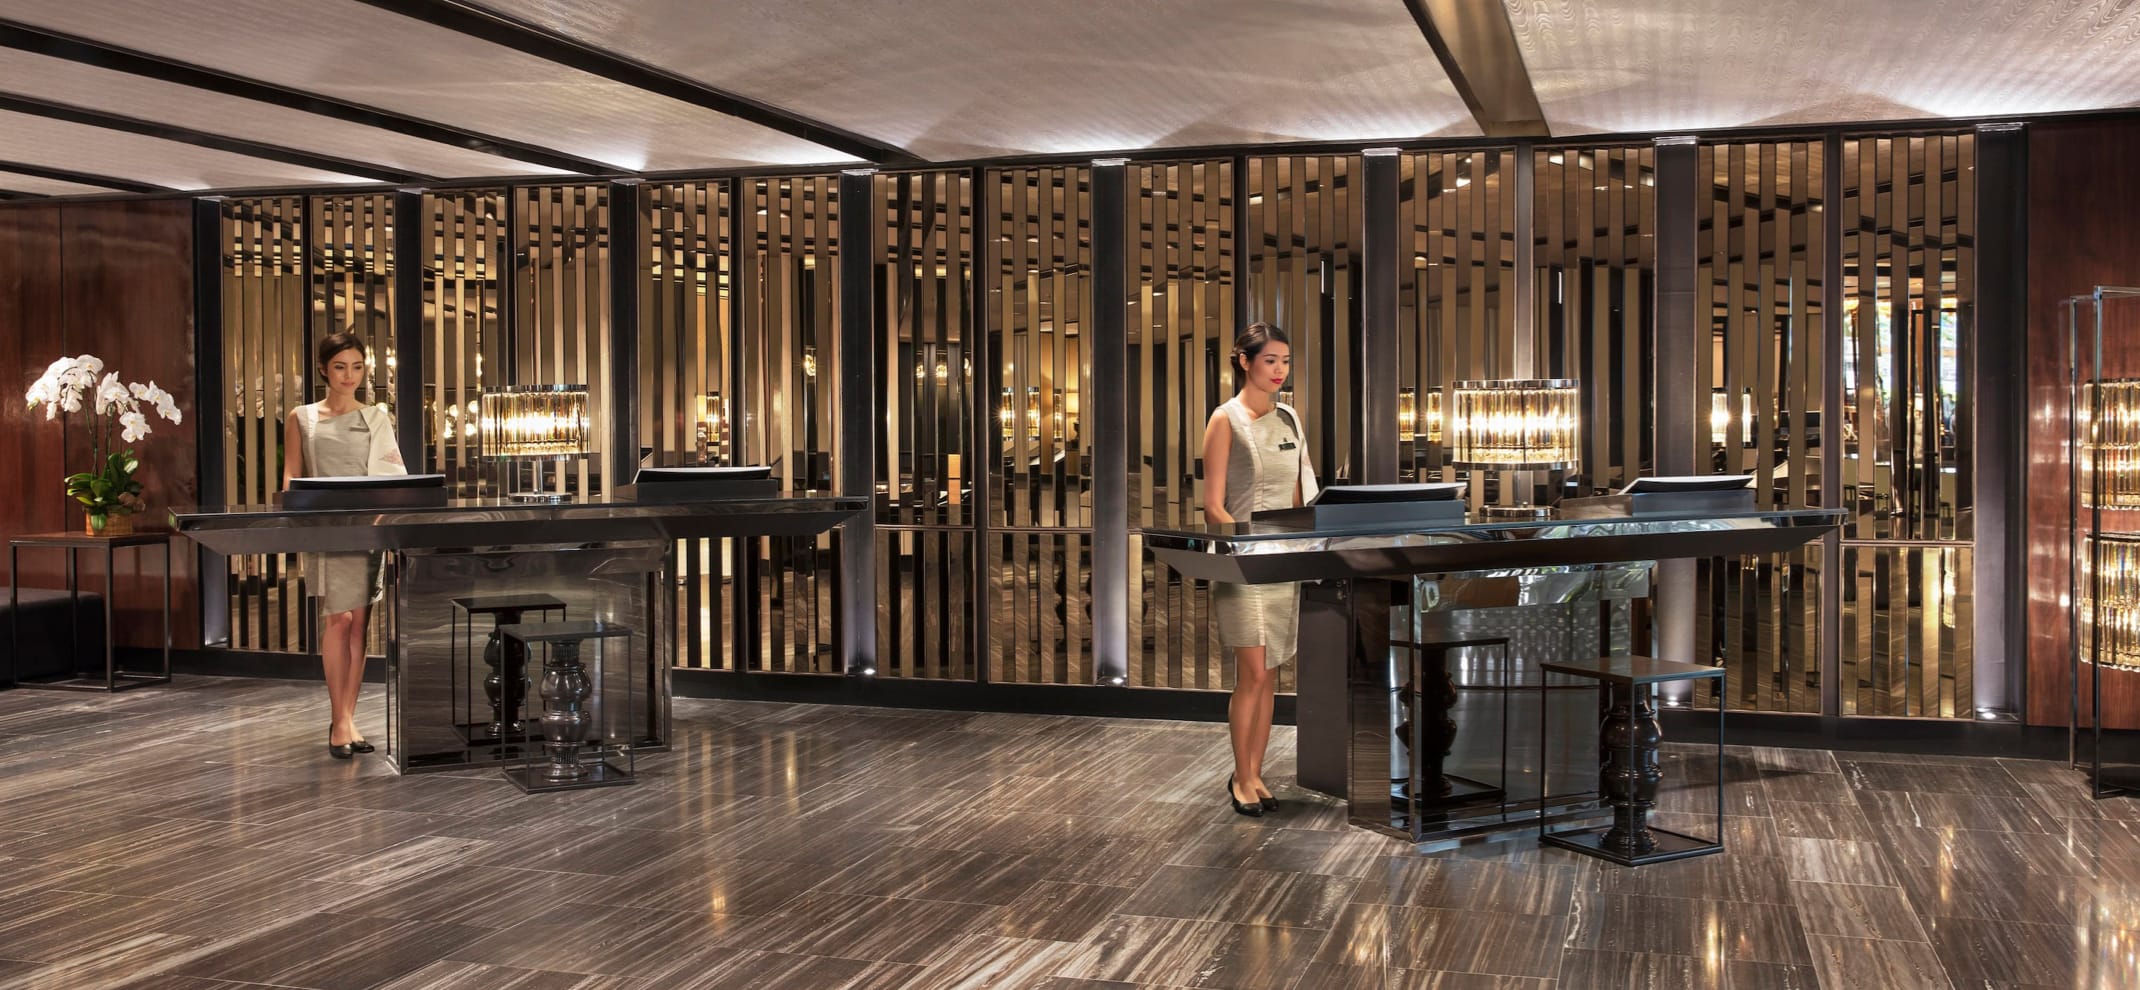 Two female concierges stand at sleek, minimalist concierge desks in a long hallway